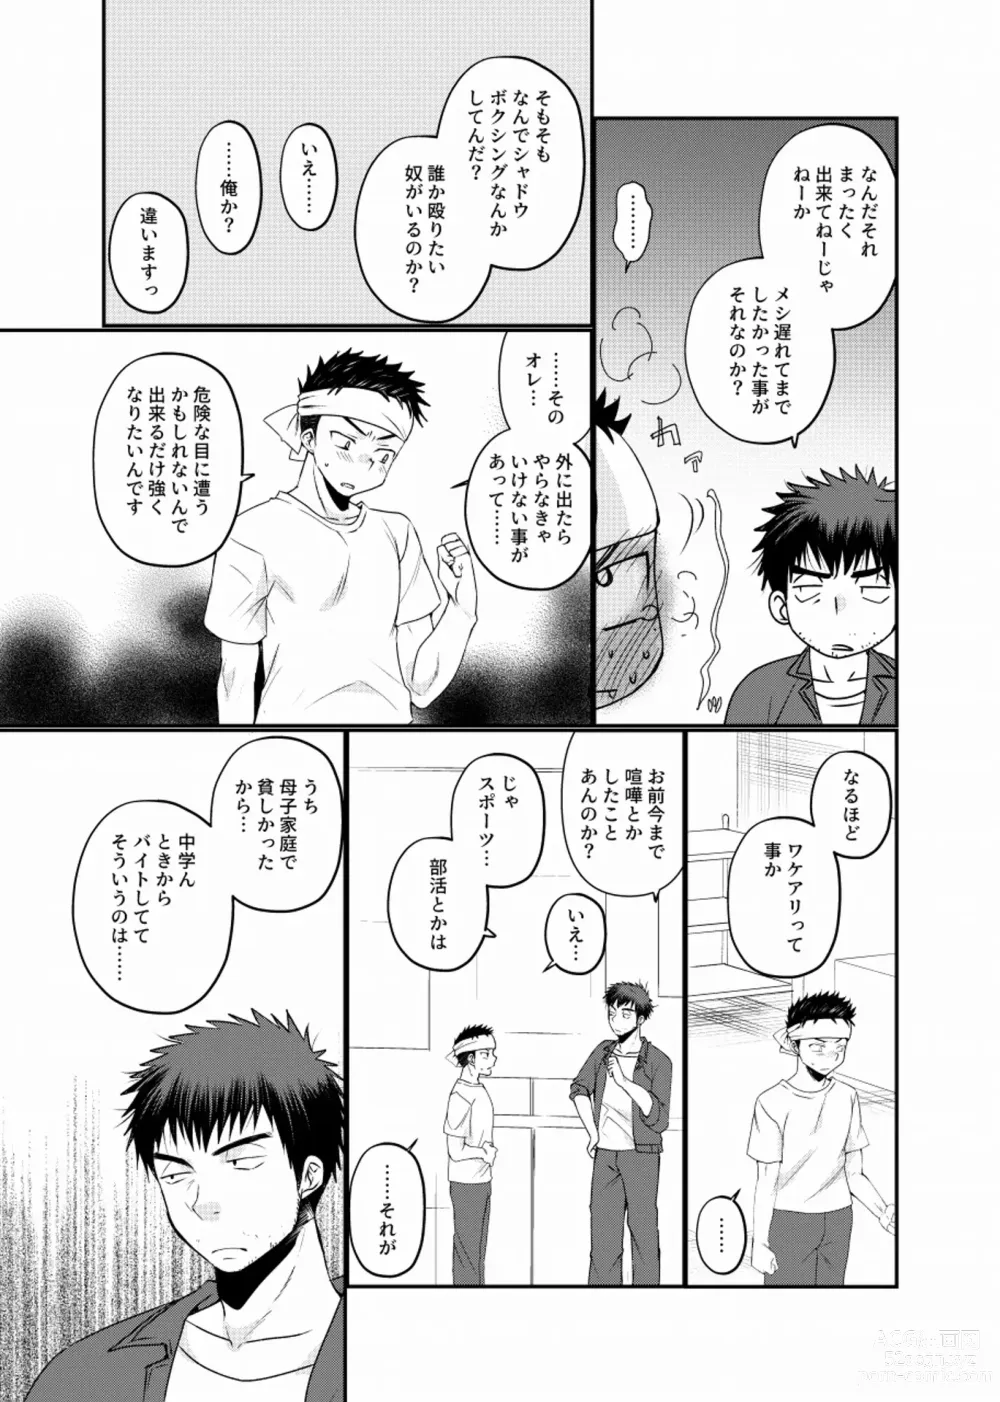 Page 10 of doujinshi 地下労働格闘少年